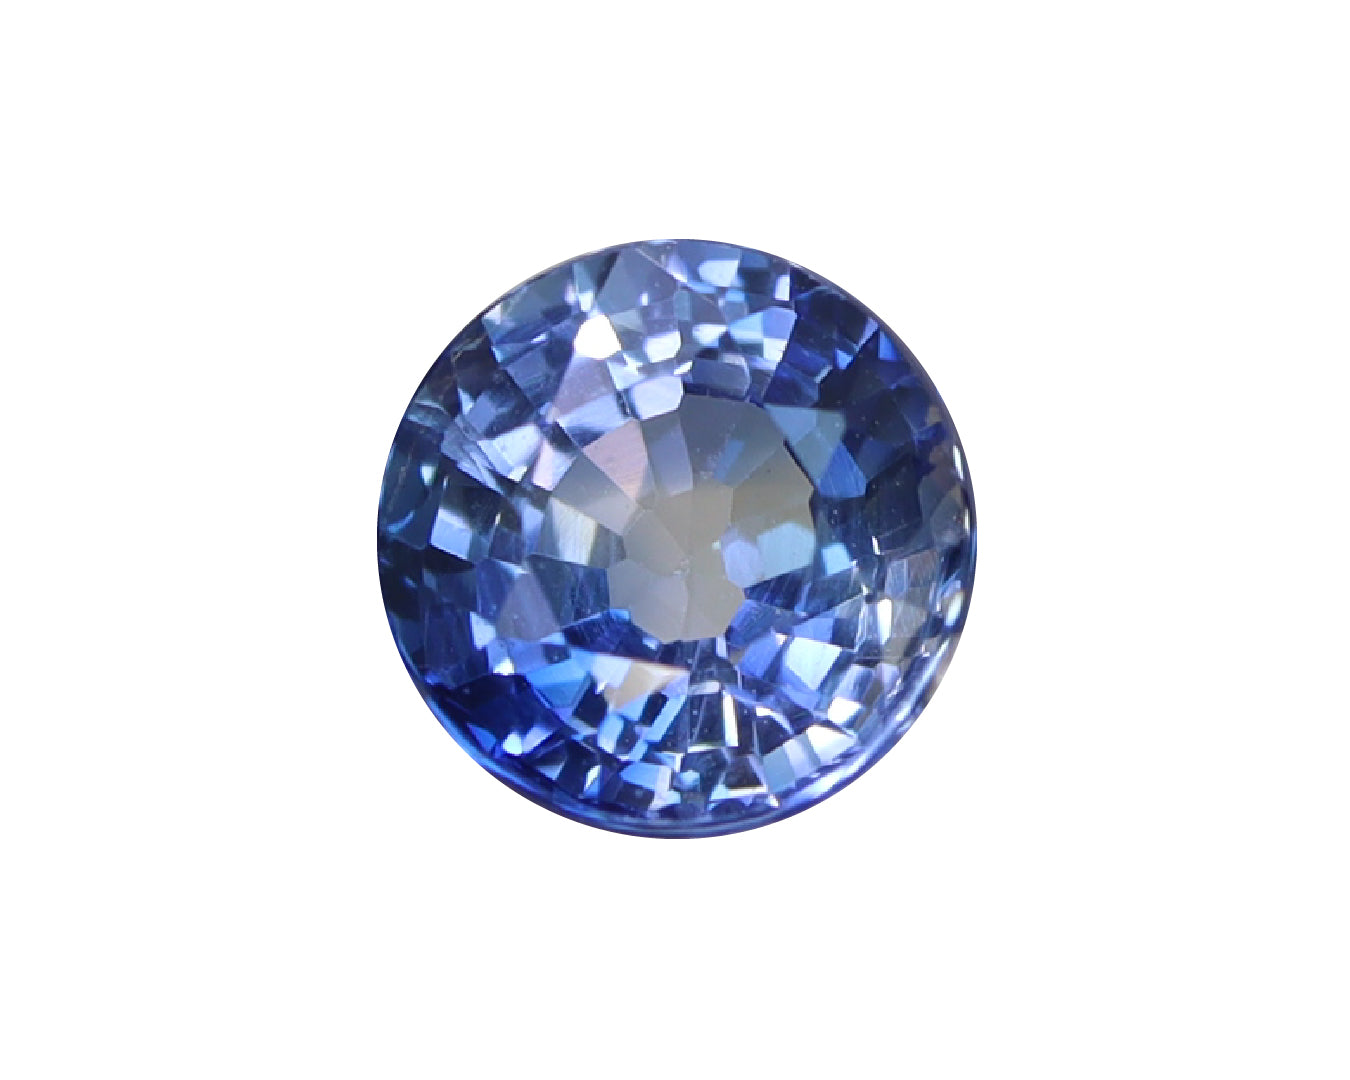 Piedra Zafiro Azul 0.43 cts S-1541